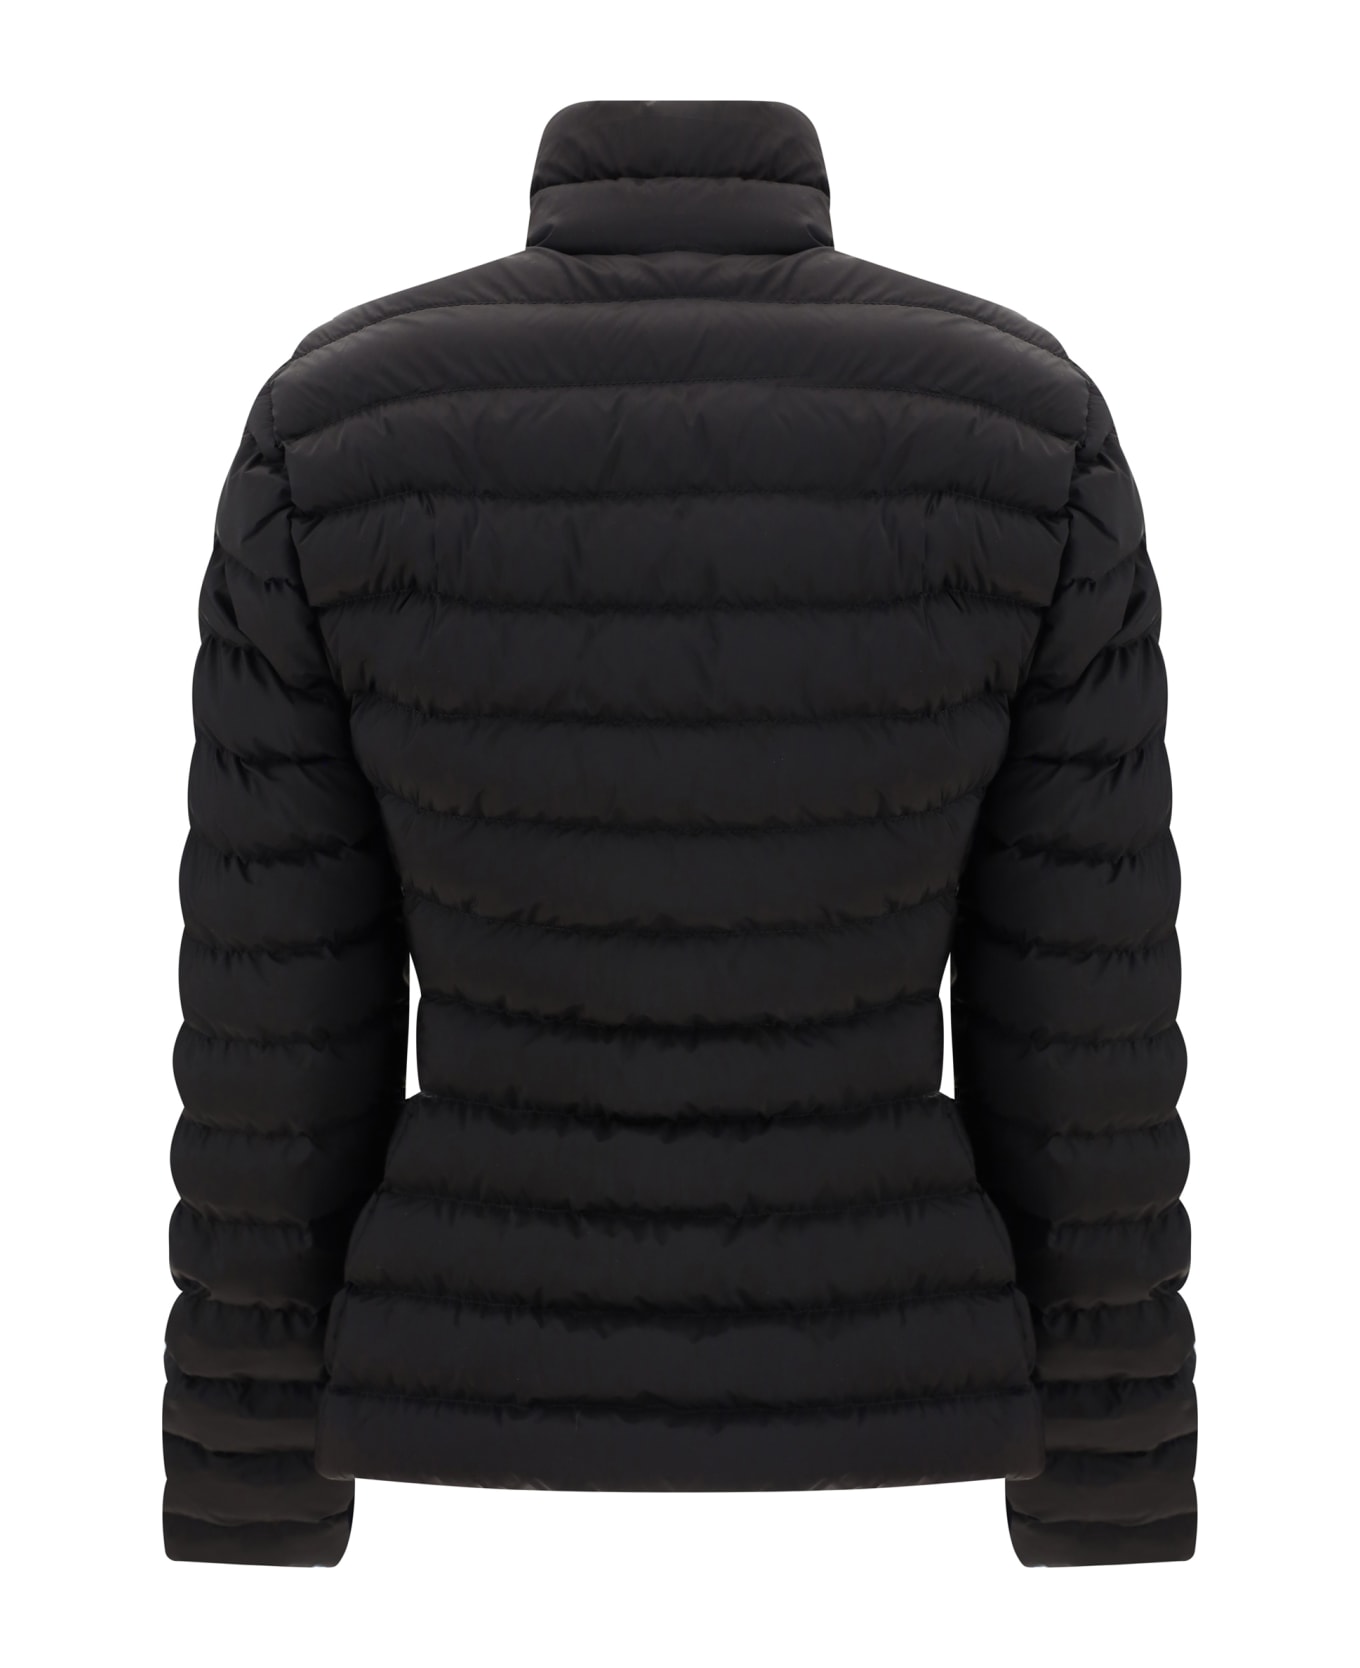 Balenciaga Puff Jacket - Black ダウンジャケット